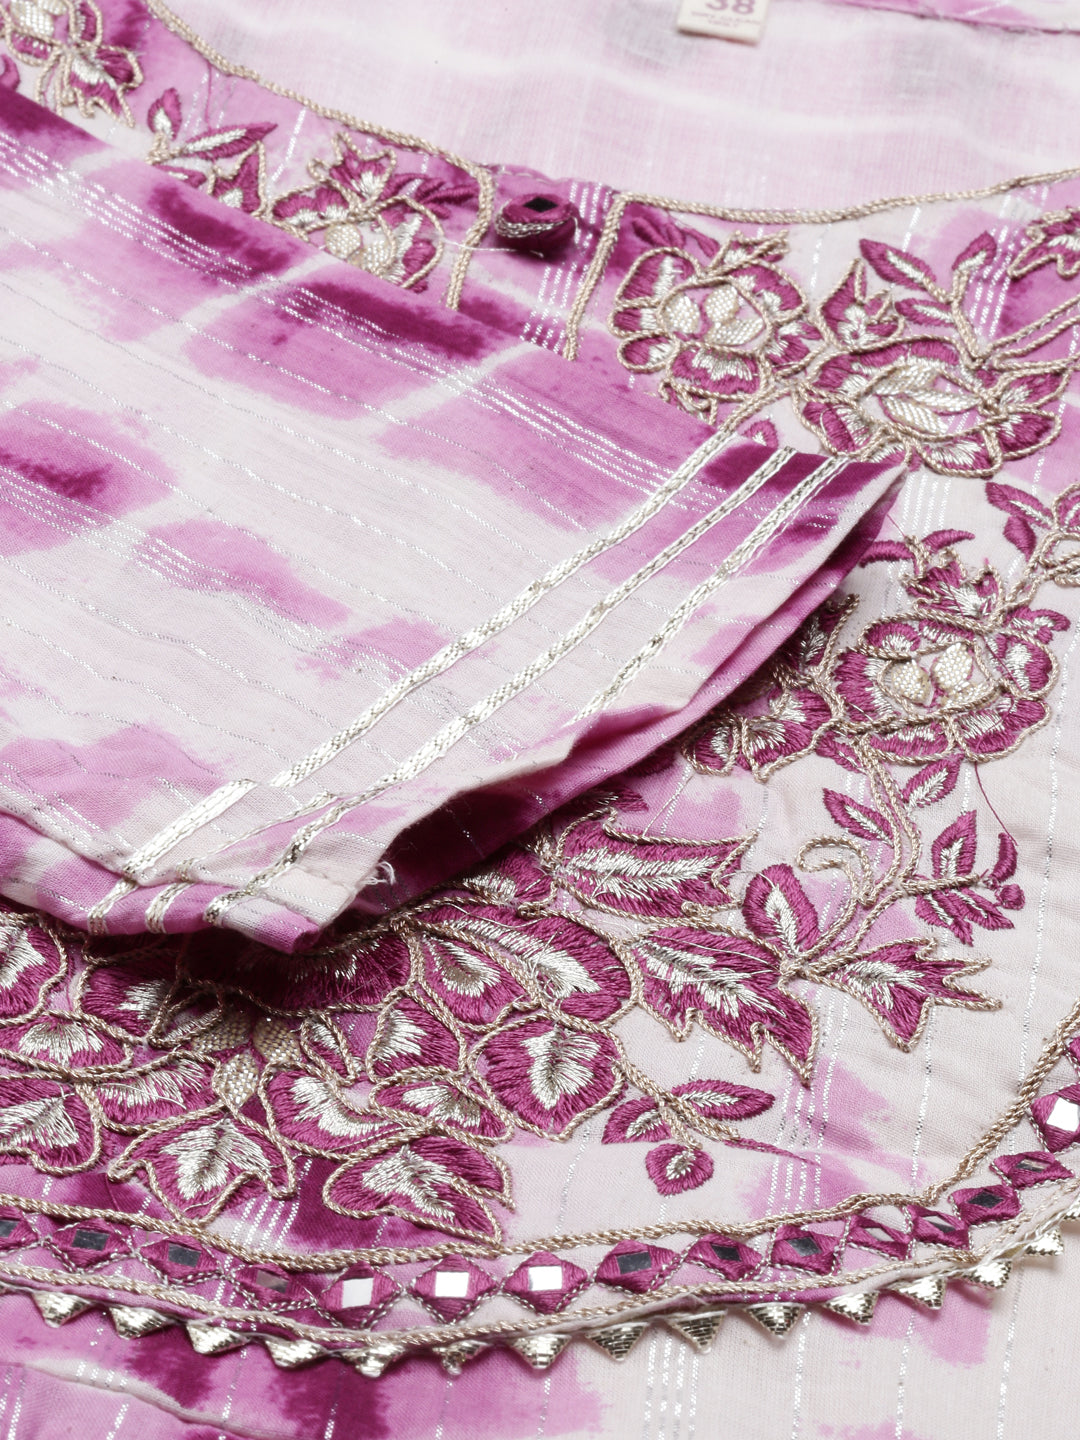 Neeru'S PURPLE Color COTTON Fabric kurta